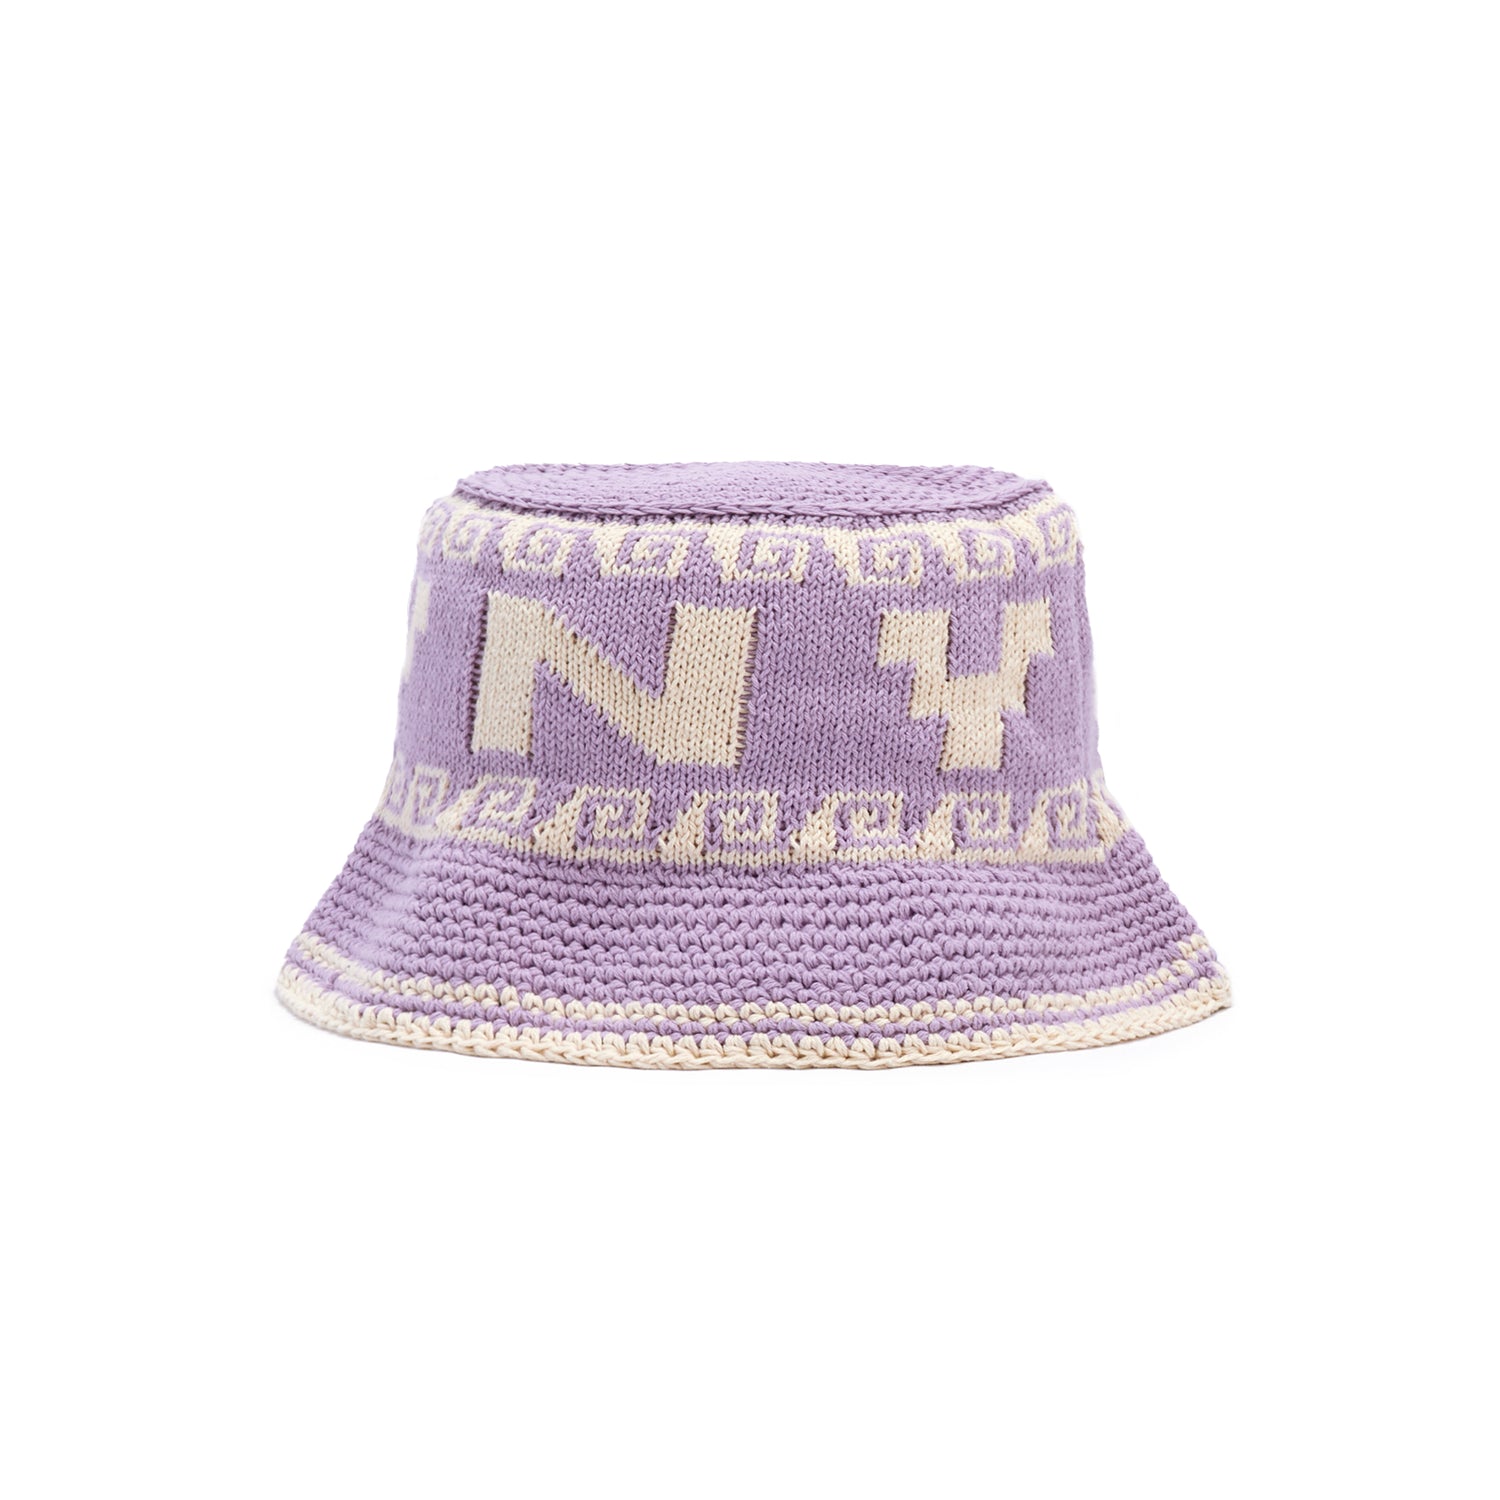 Only NY Crochet Bucket Hat - Lavender